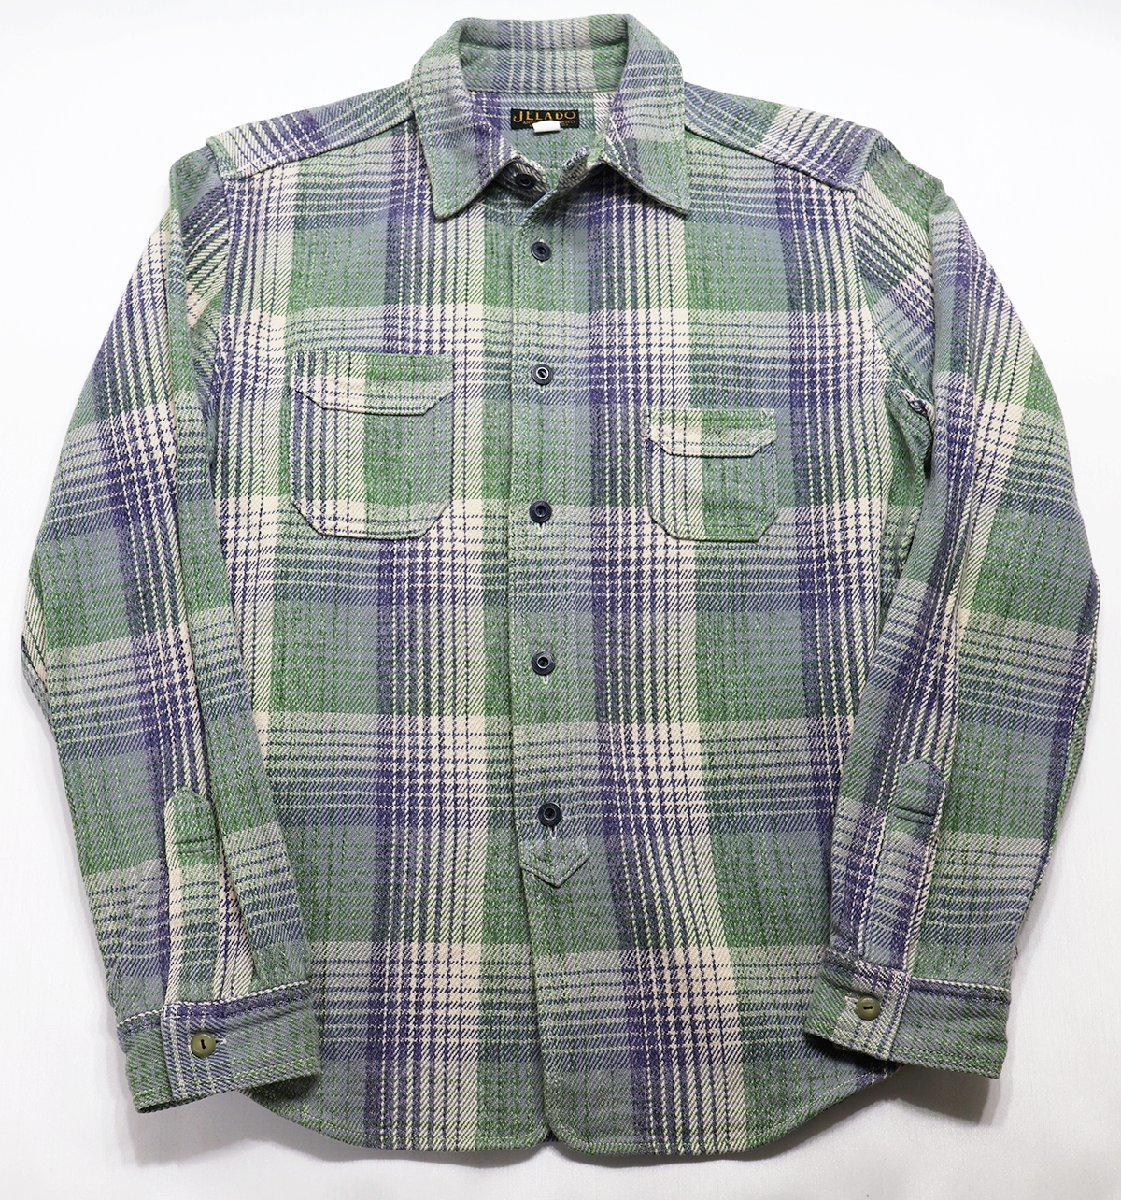 JELADO (ジェラード) LUMBERMAN SHIRT / ランバーマンシャツ スペックネル JAGSH-001 極美品 オールドグリーン size 16(L)